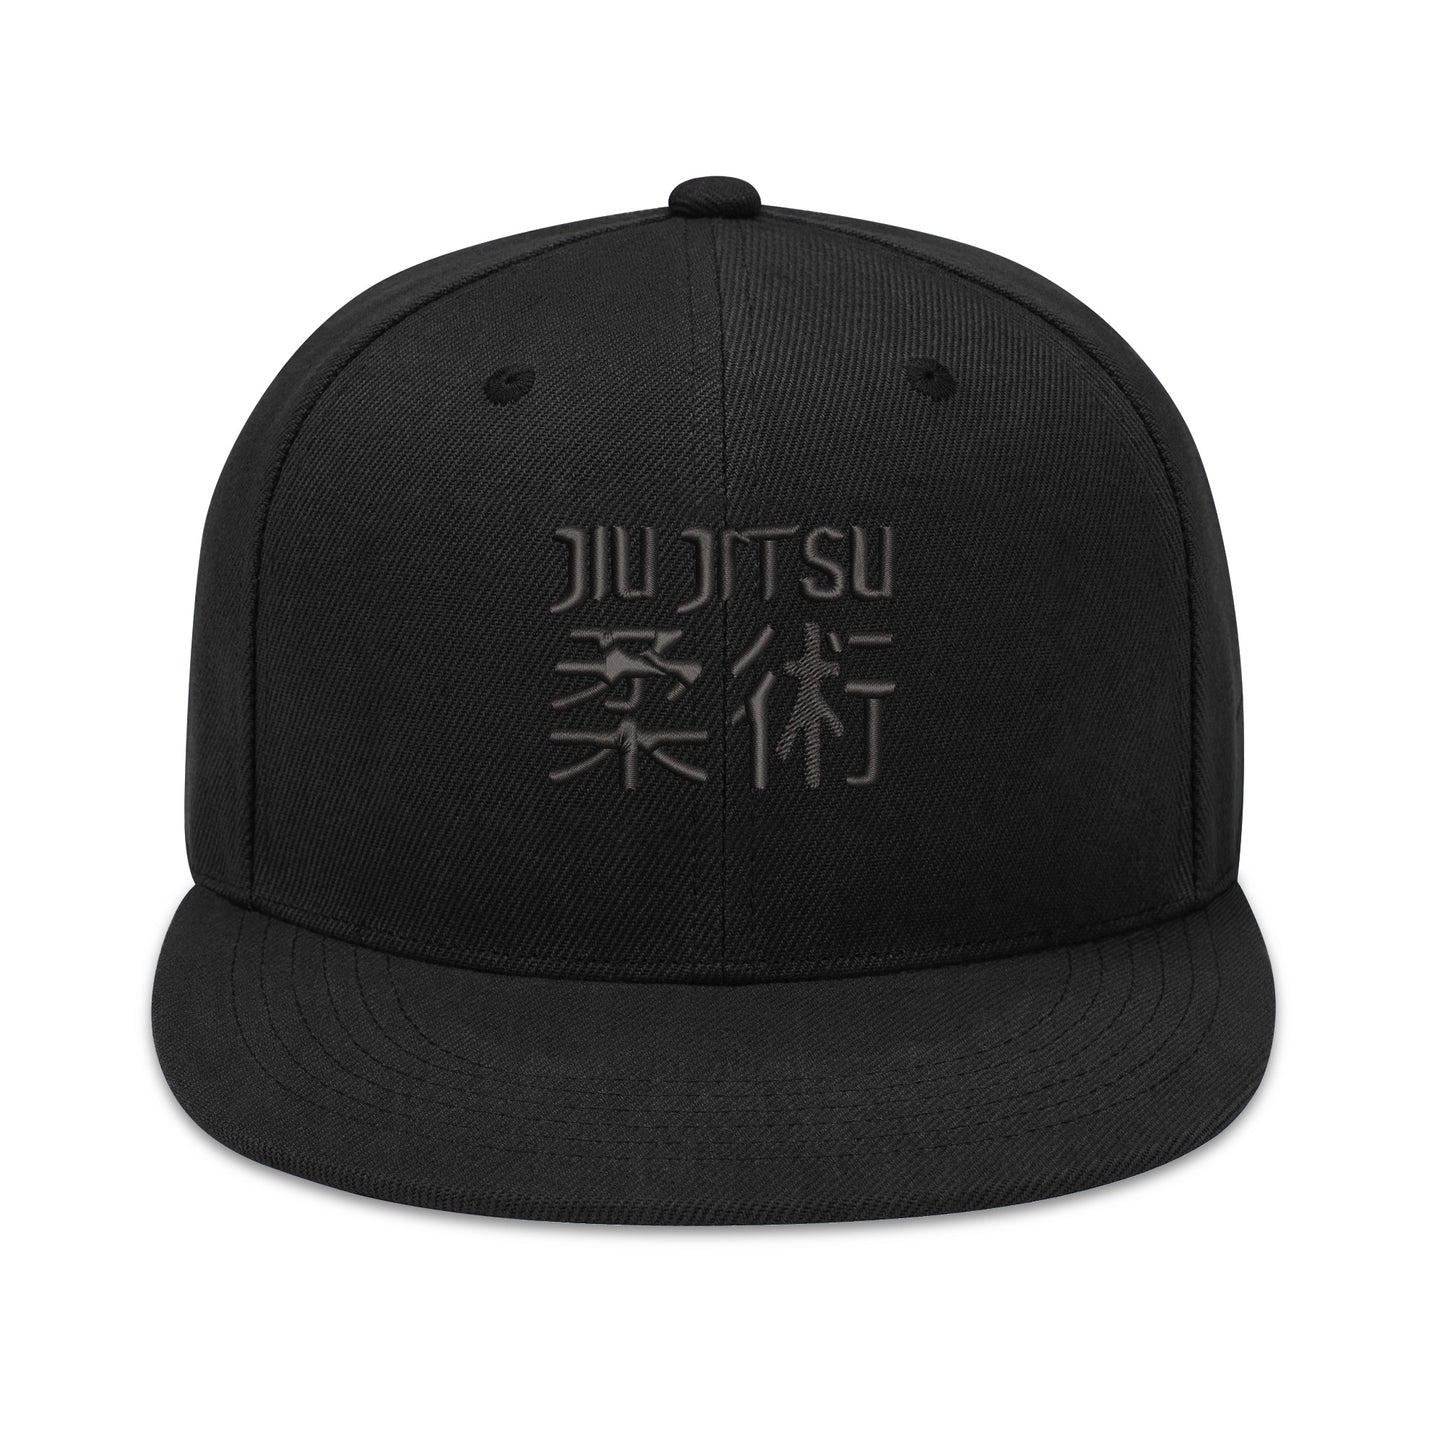 Onix Jitsu Cap